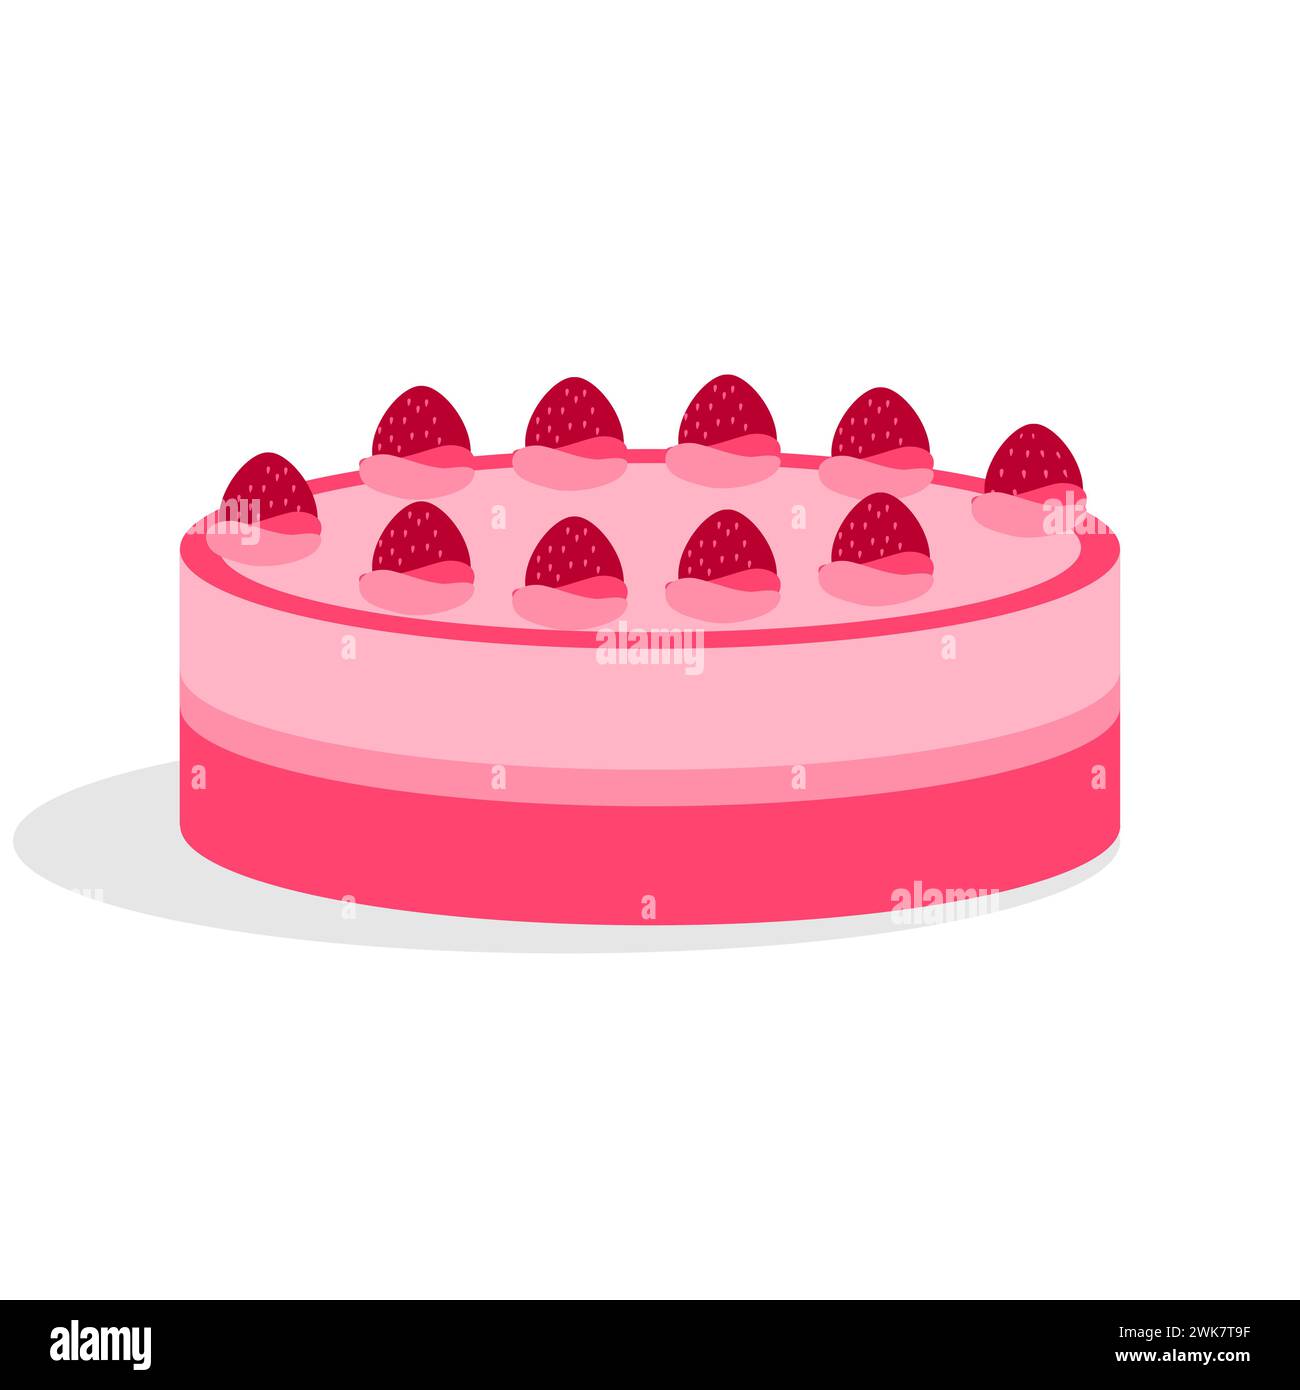 Art illustration design concept fast junk food seamless symbol logo of strawberry cake Stock Vector